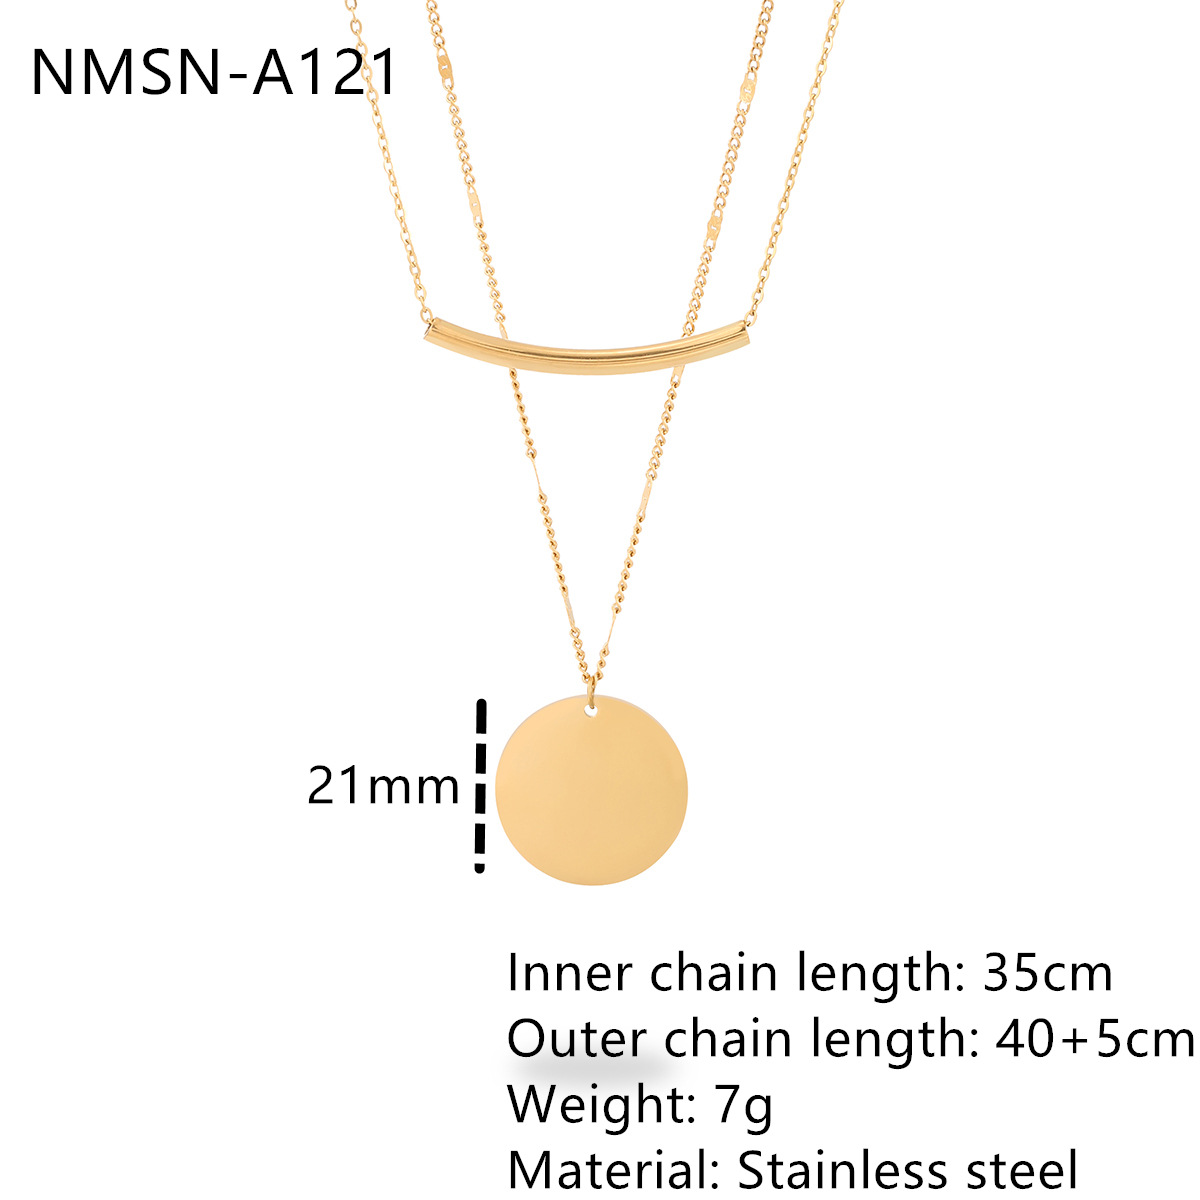 NMSN-A121